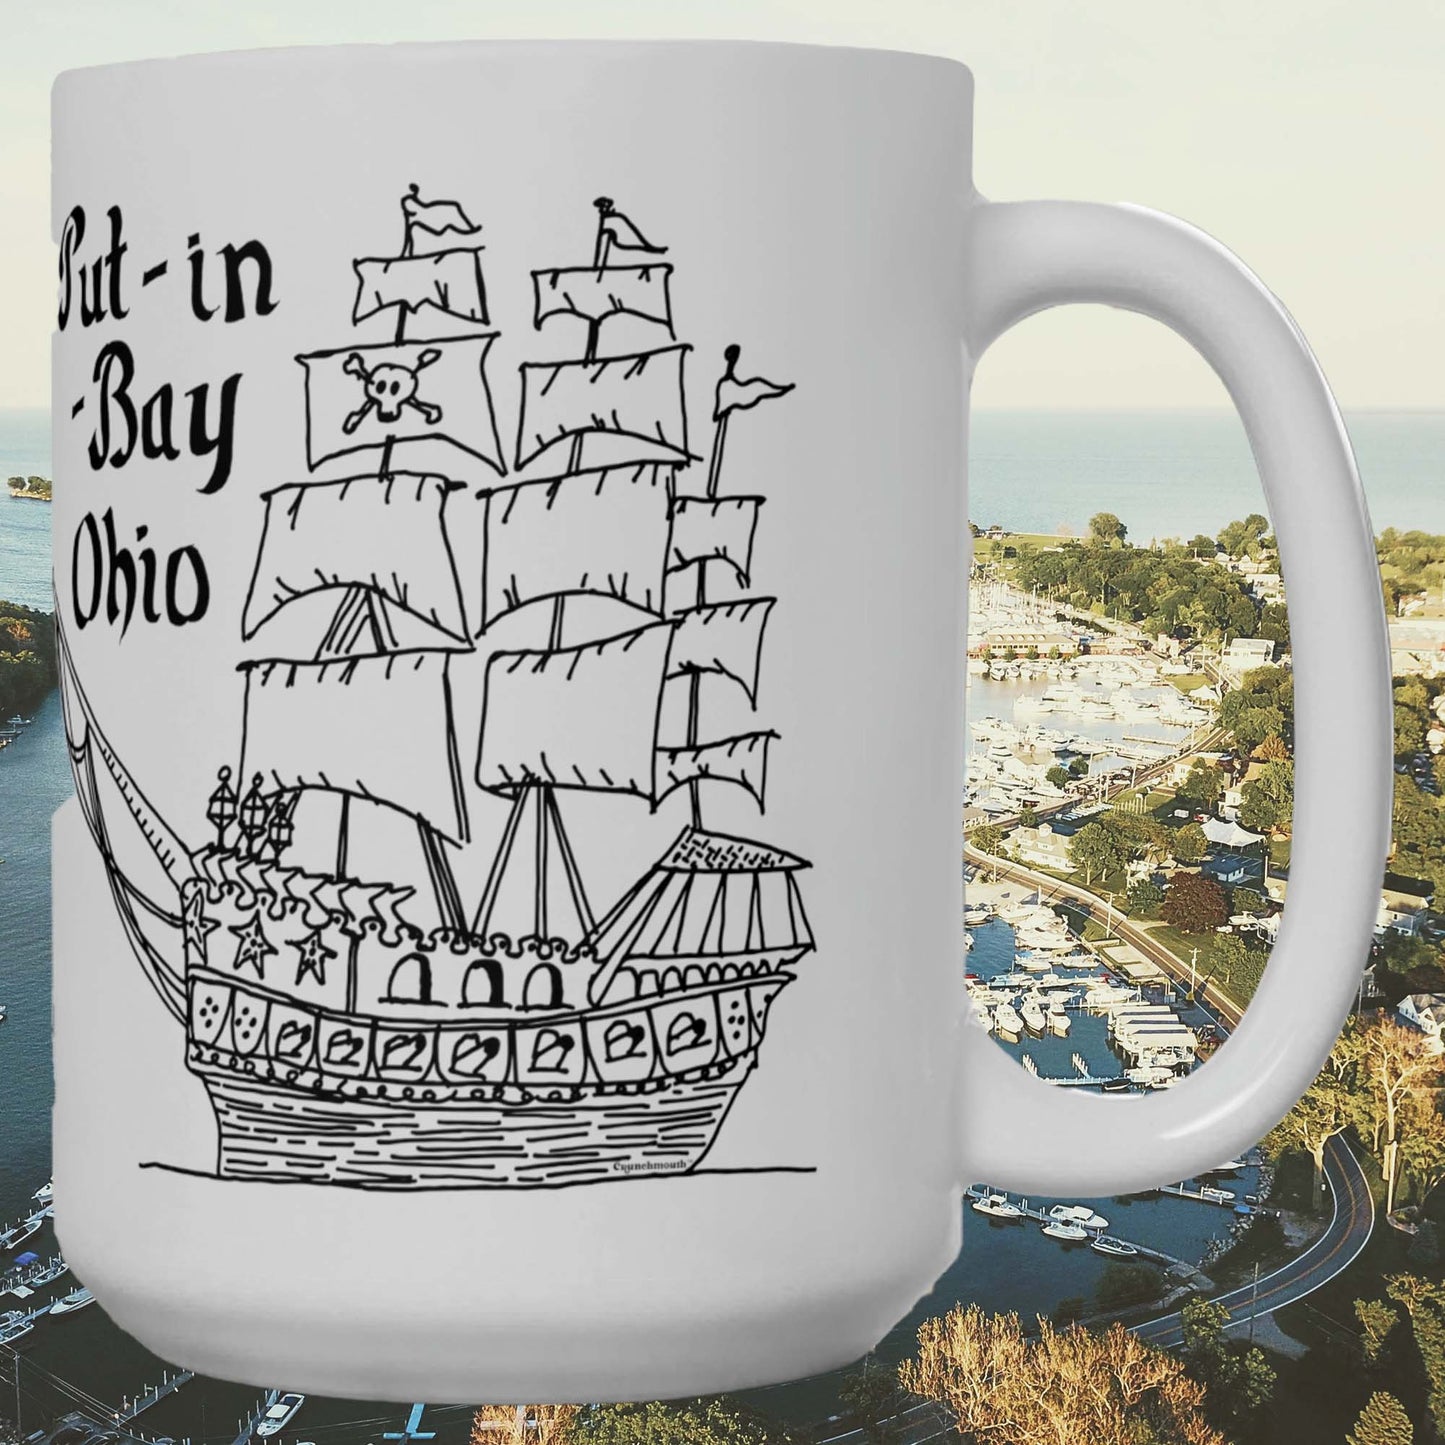 put in bay pirate ship coffee mug gallery pic